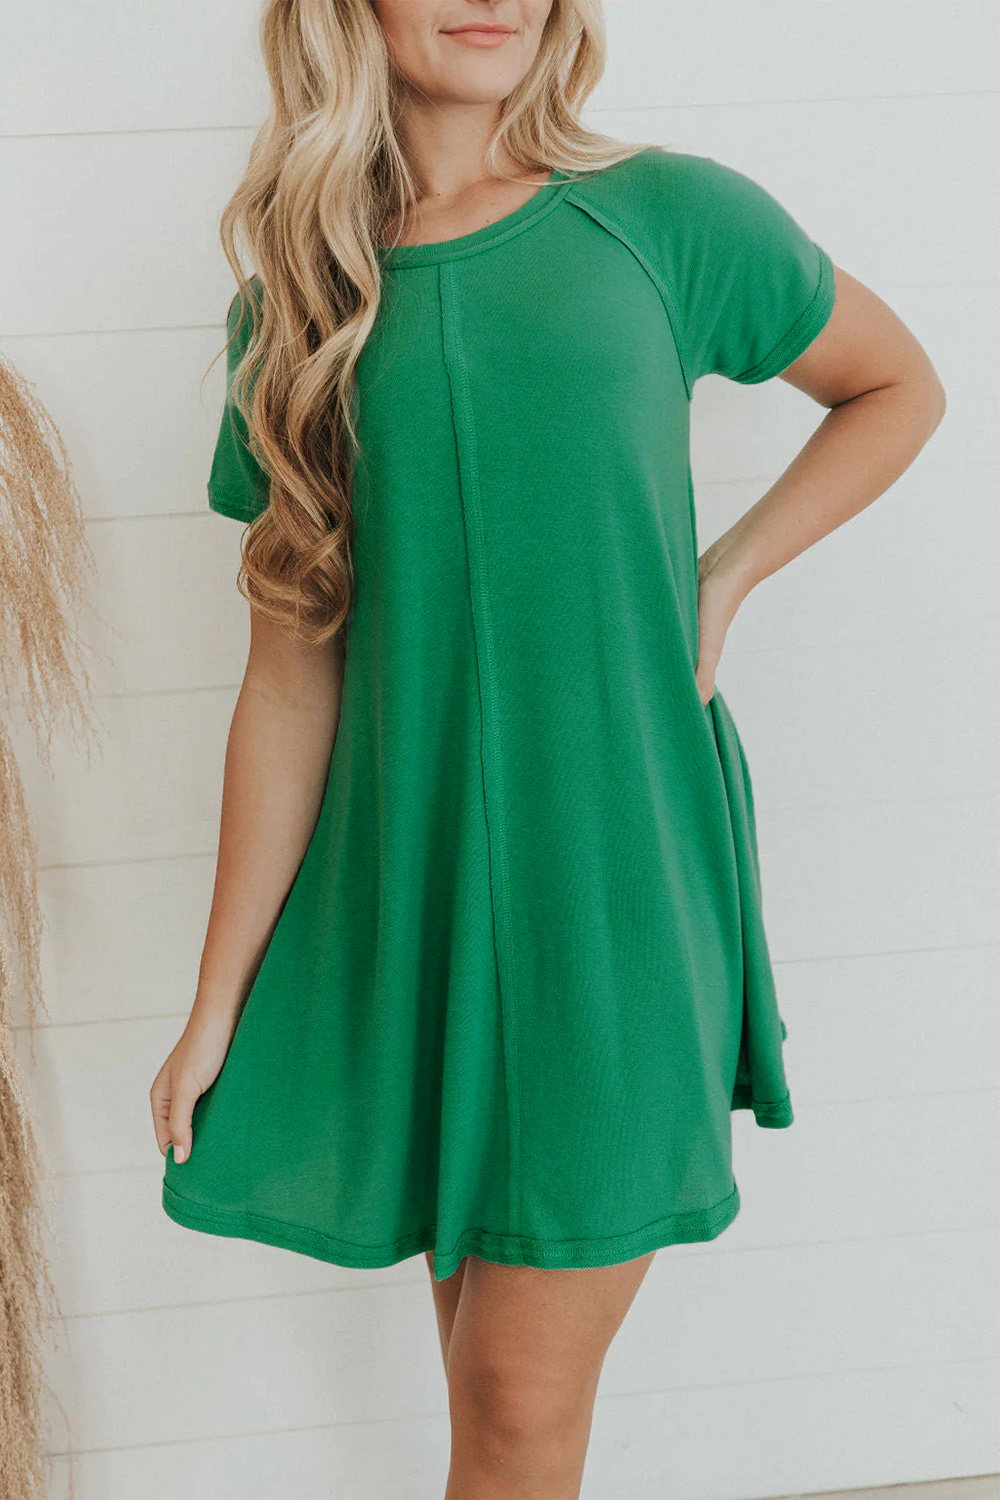 Bright Green Solid Color Center Seam T SHIRT Dress